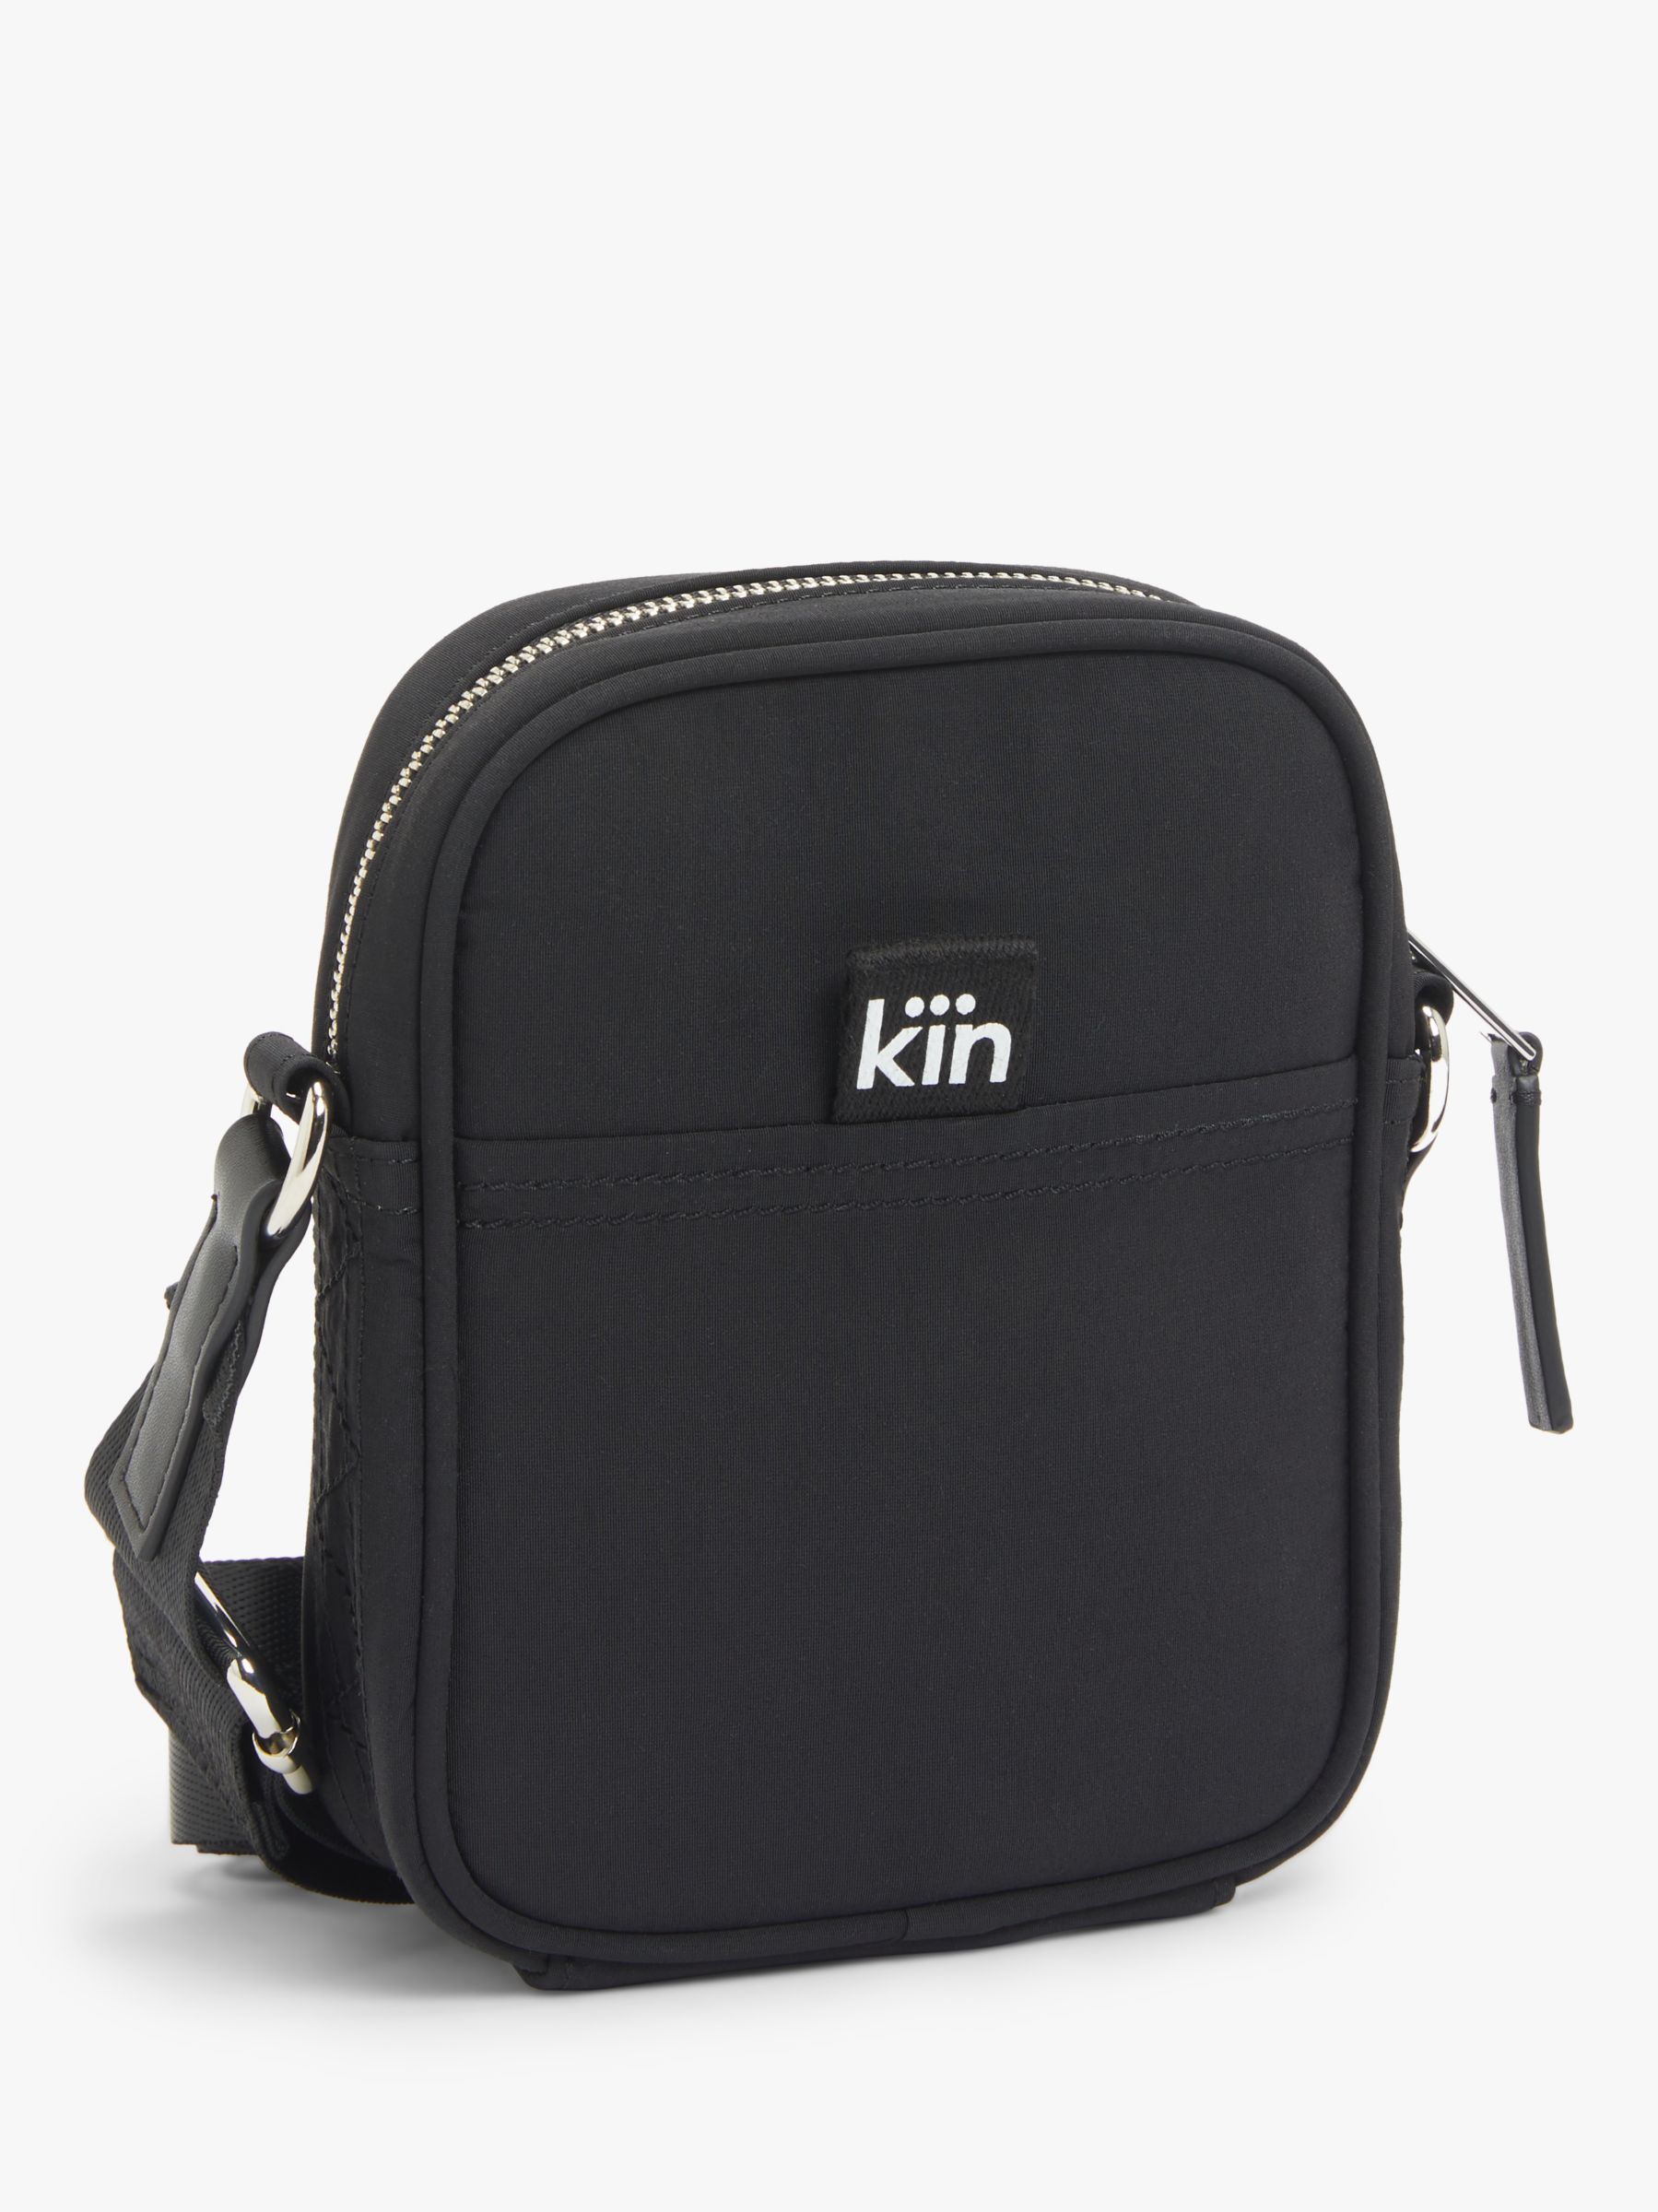 Kin North South Cross Body Bag, Black at John Lewis & Partners